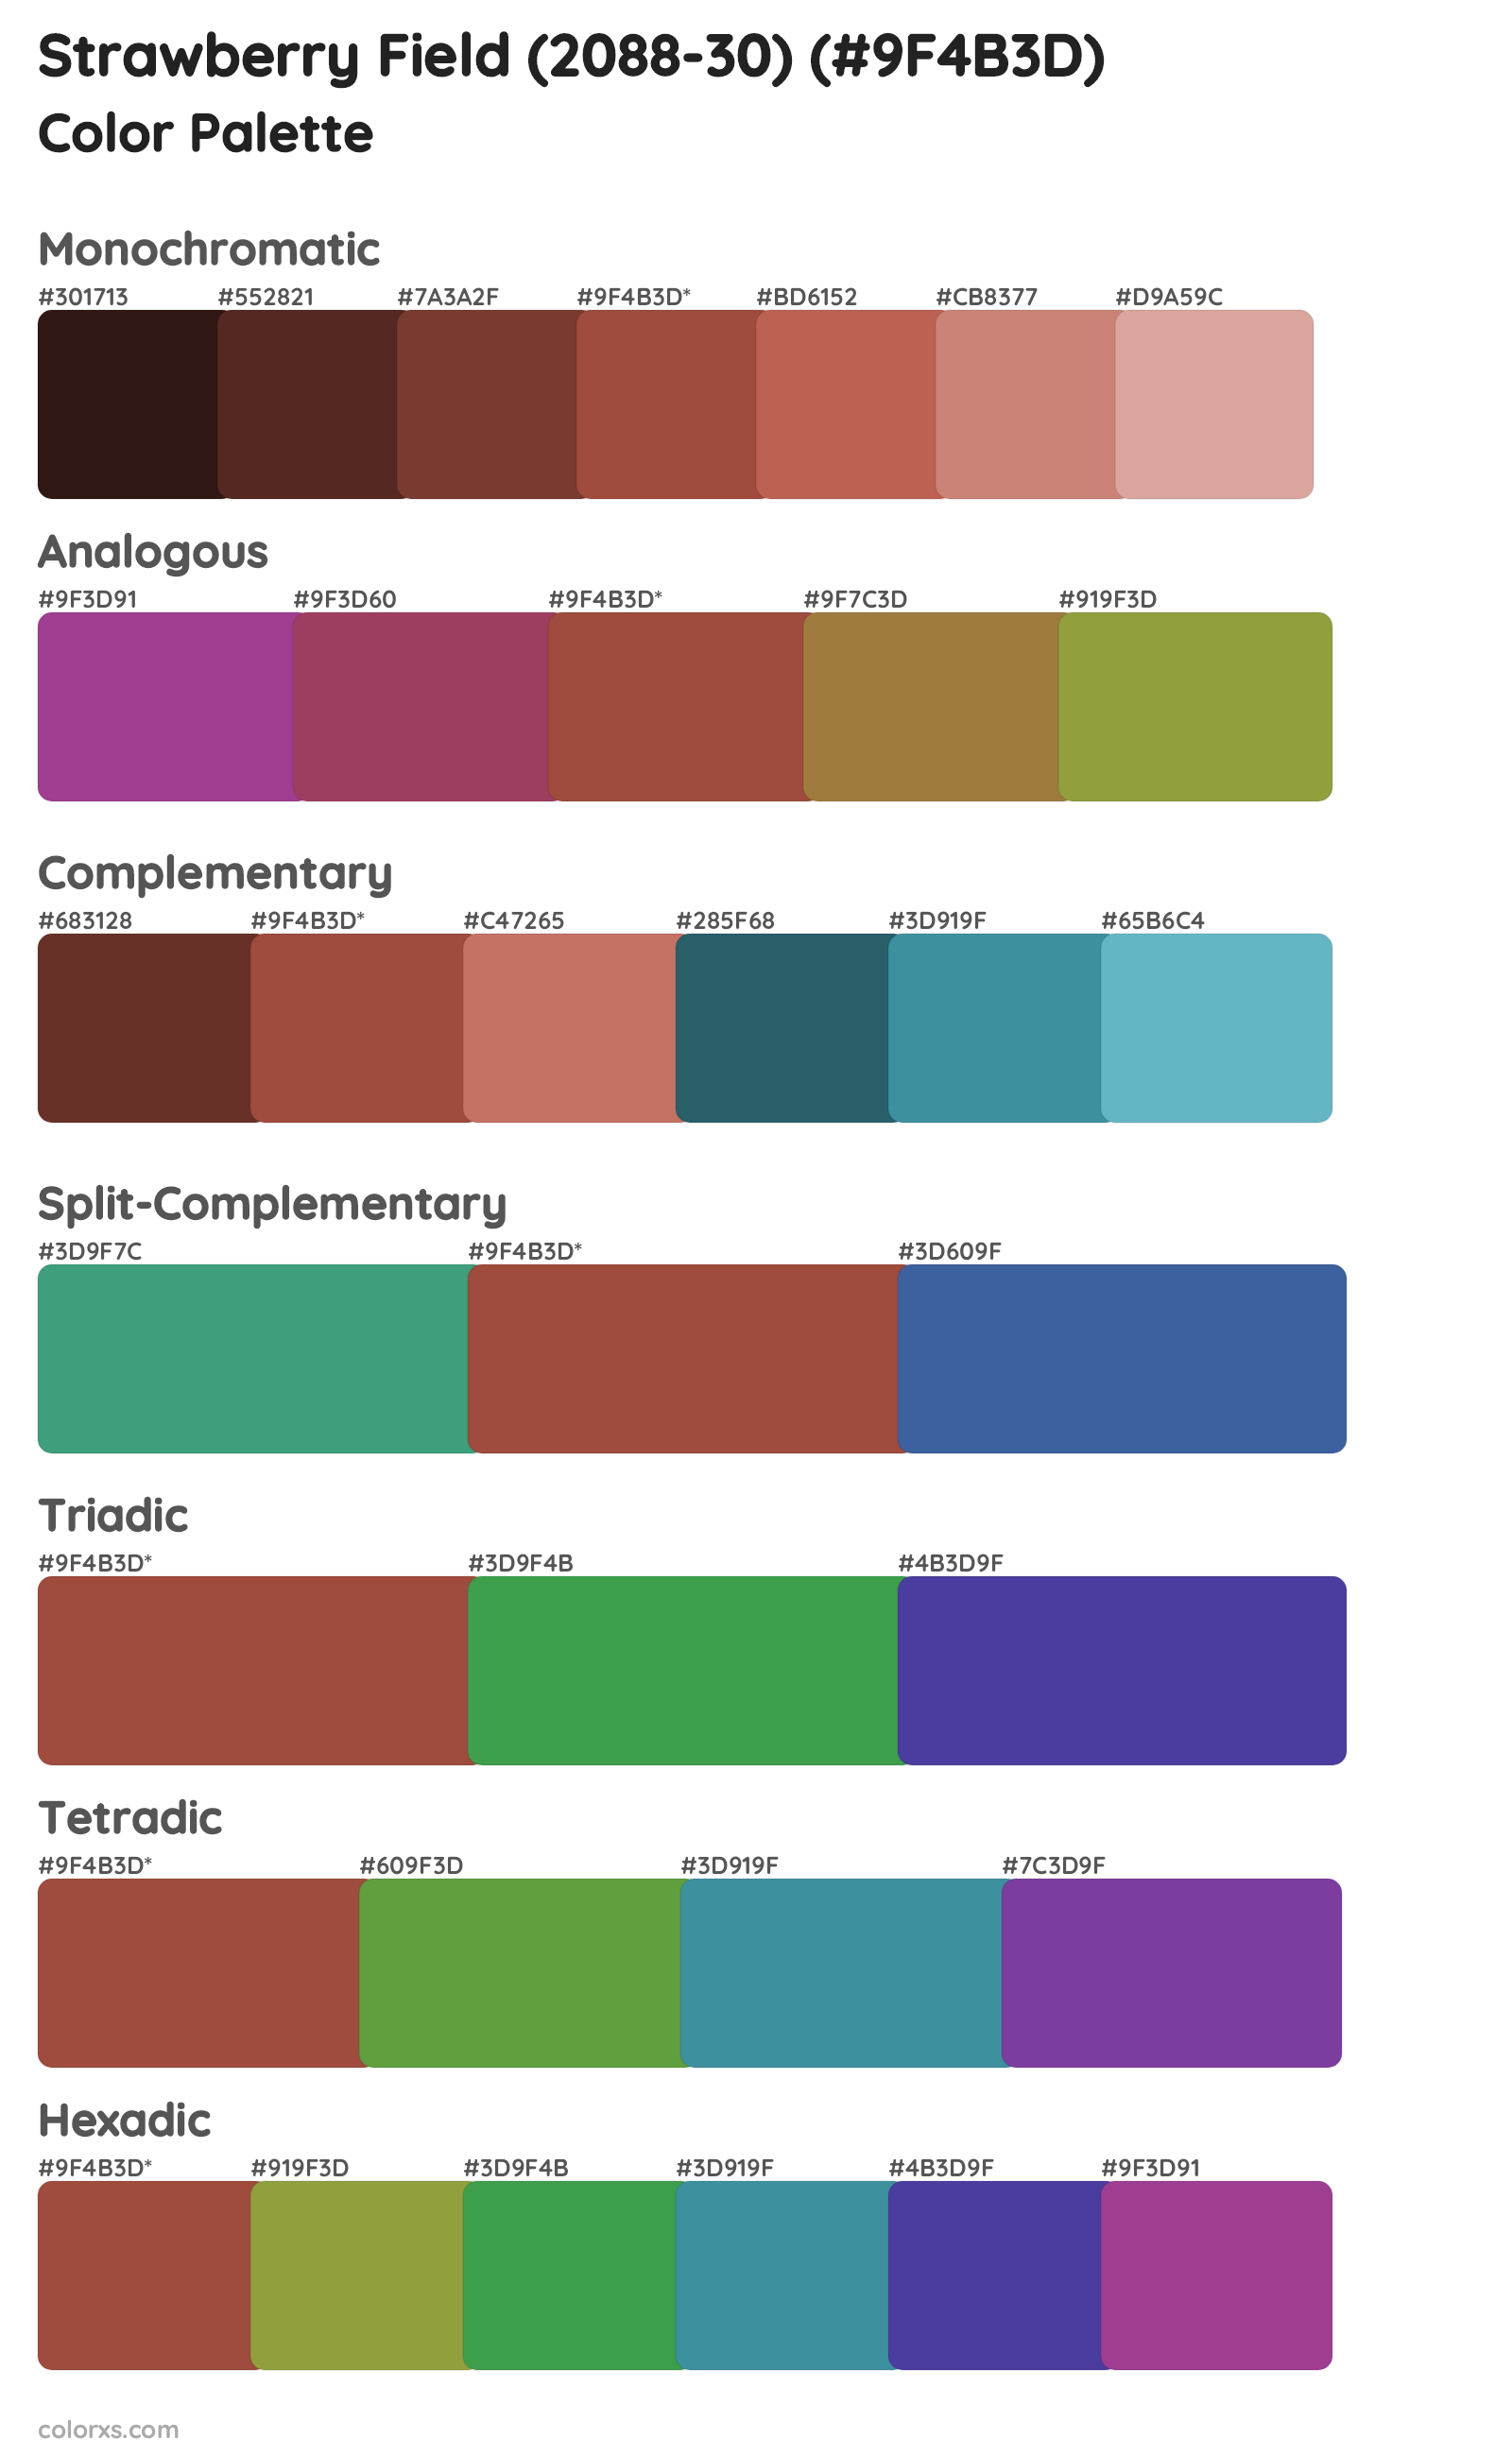 Strawberry Field (2088-30) Color Scheme Palettes